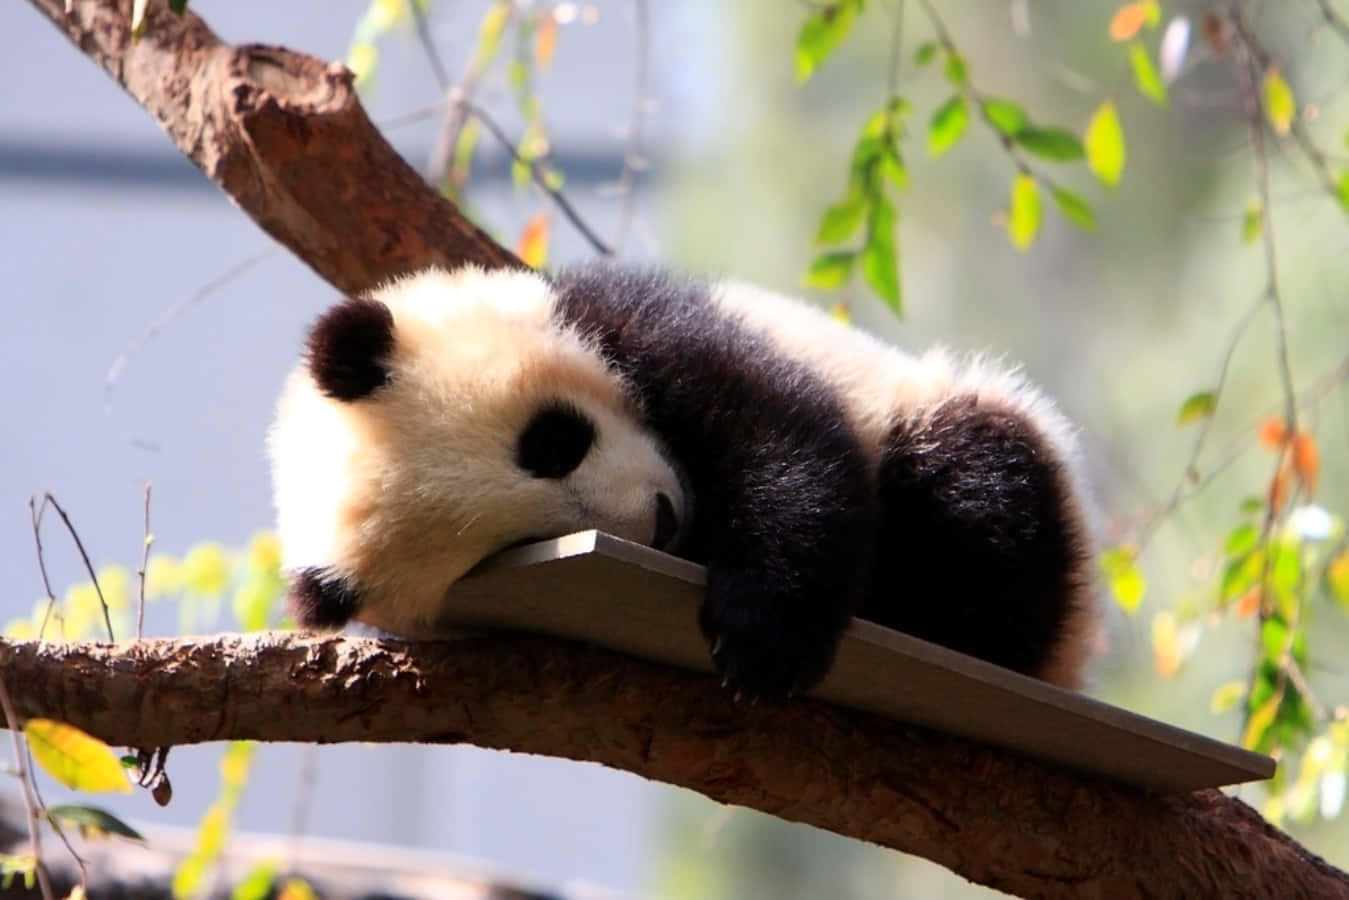 A Cute Pandas Sitting on a Bamboo Branch